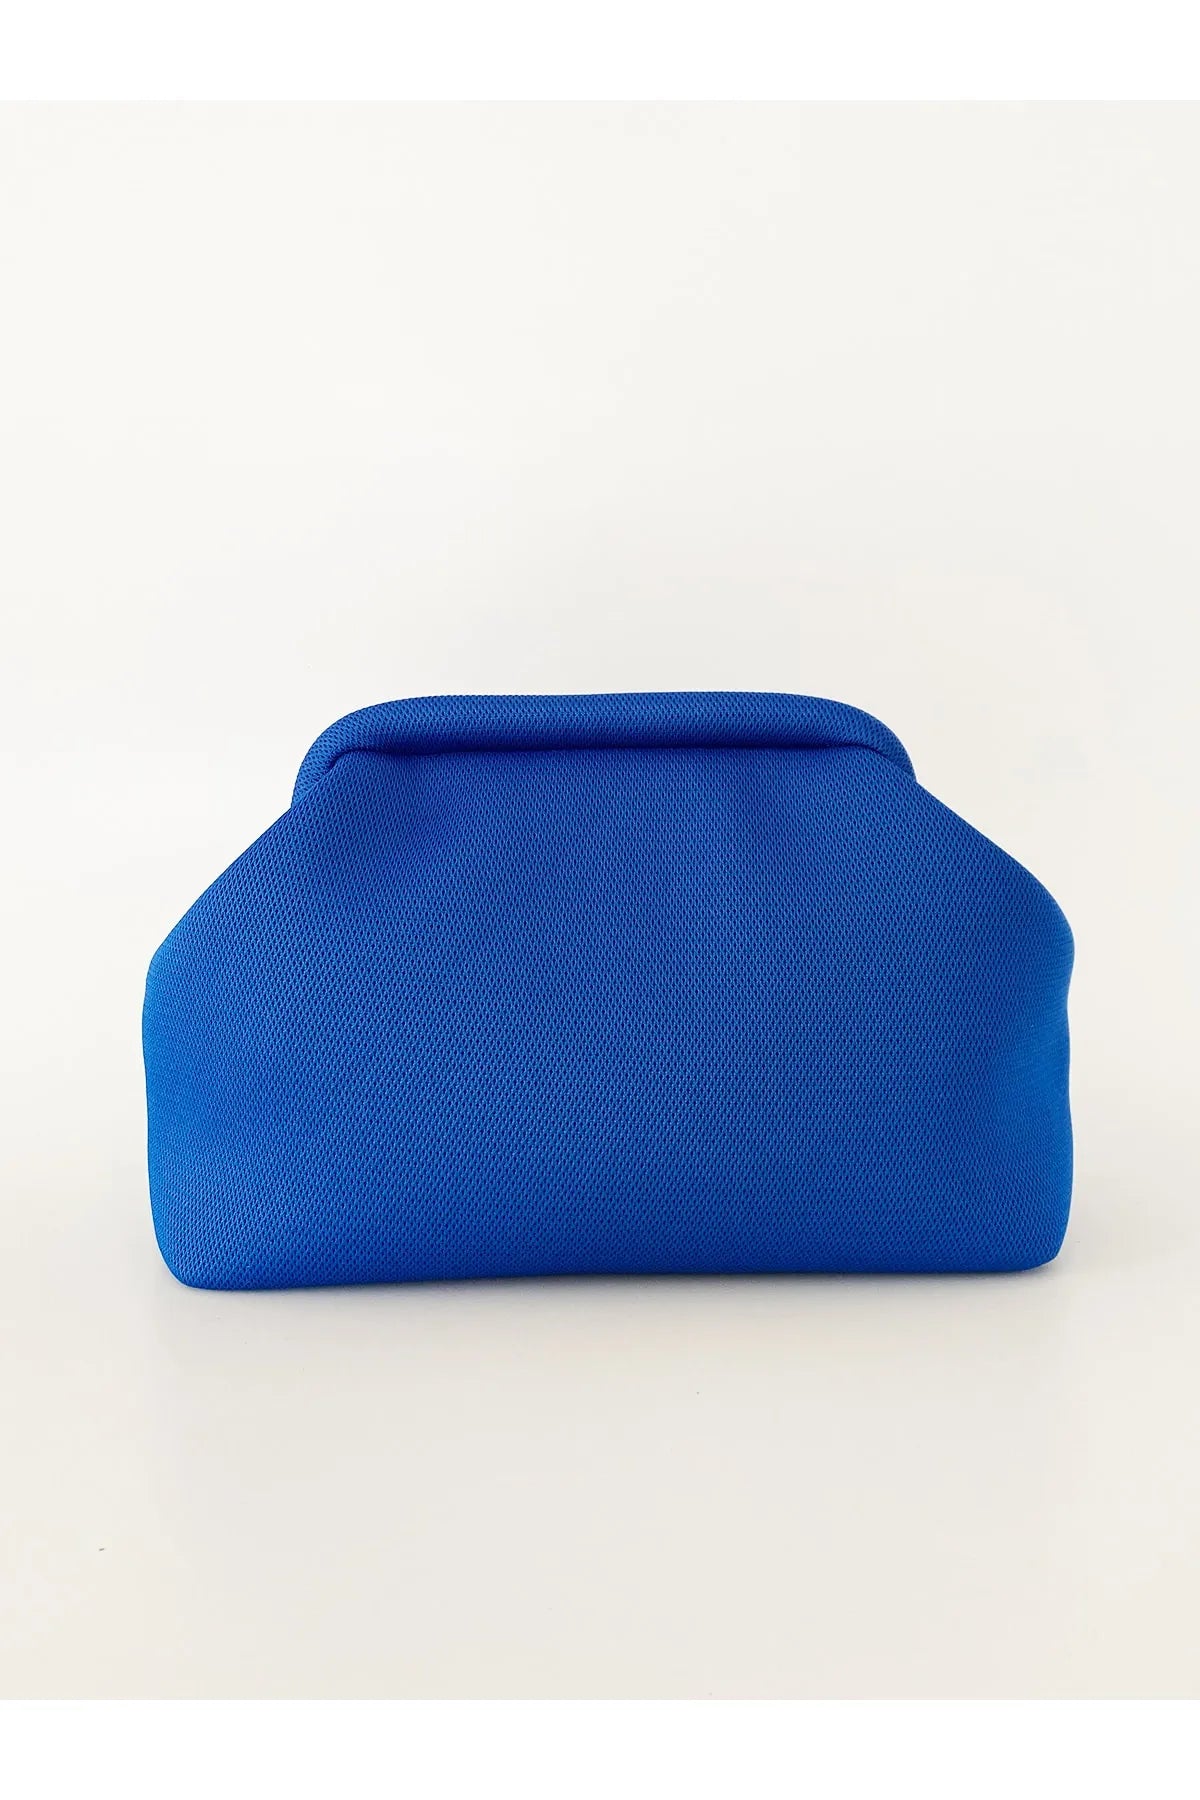 Blue Clutch Bag clutch LUNARITY GARAGE   